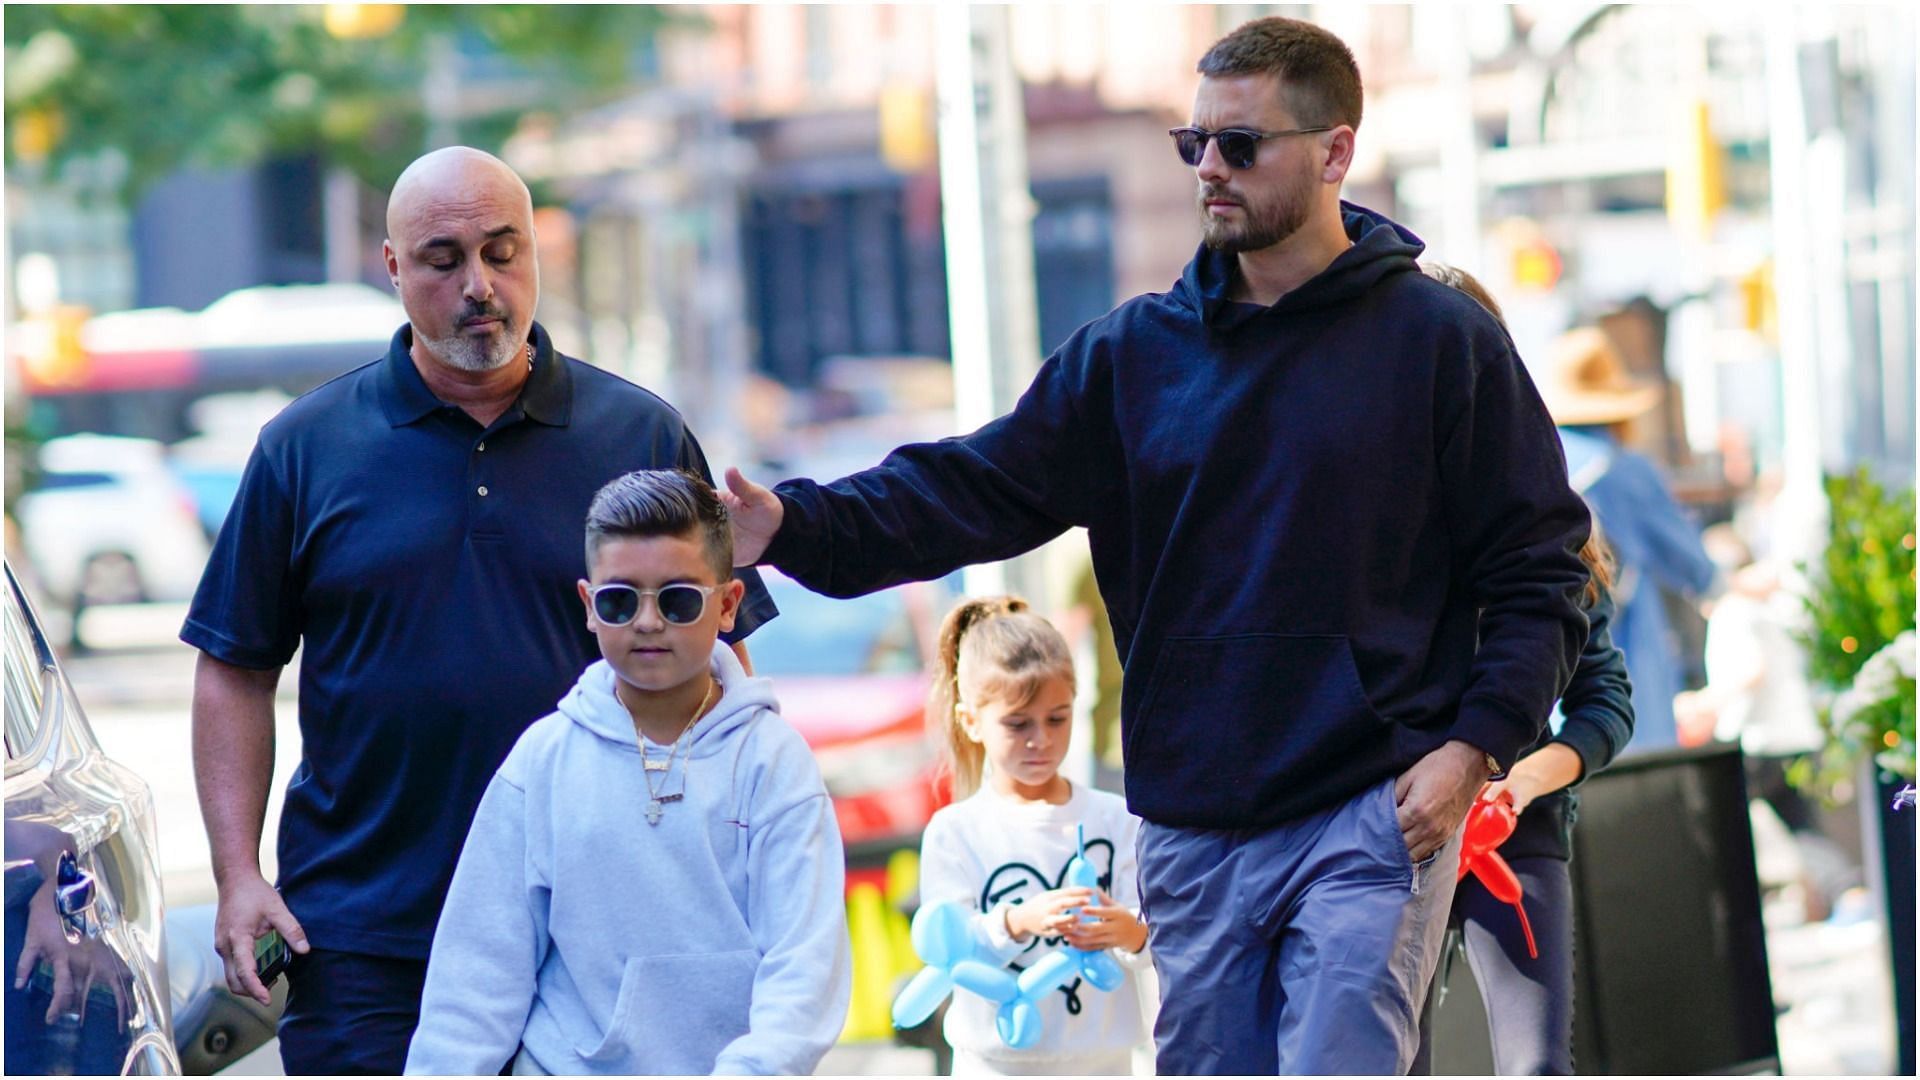 Scott Disick and Kourtney Kardashian take their kids Mason, Penelope, and Reign to lunch (Image via Gotham/Getty Images)